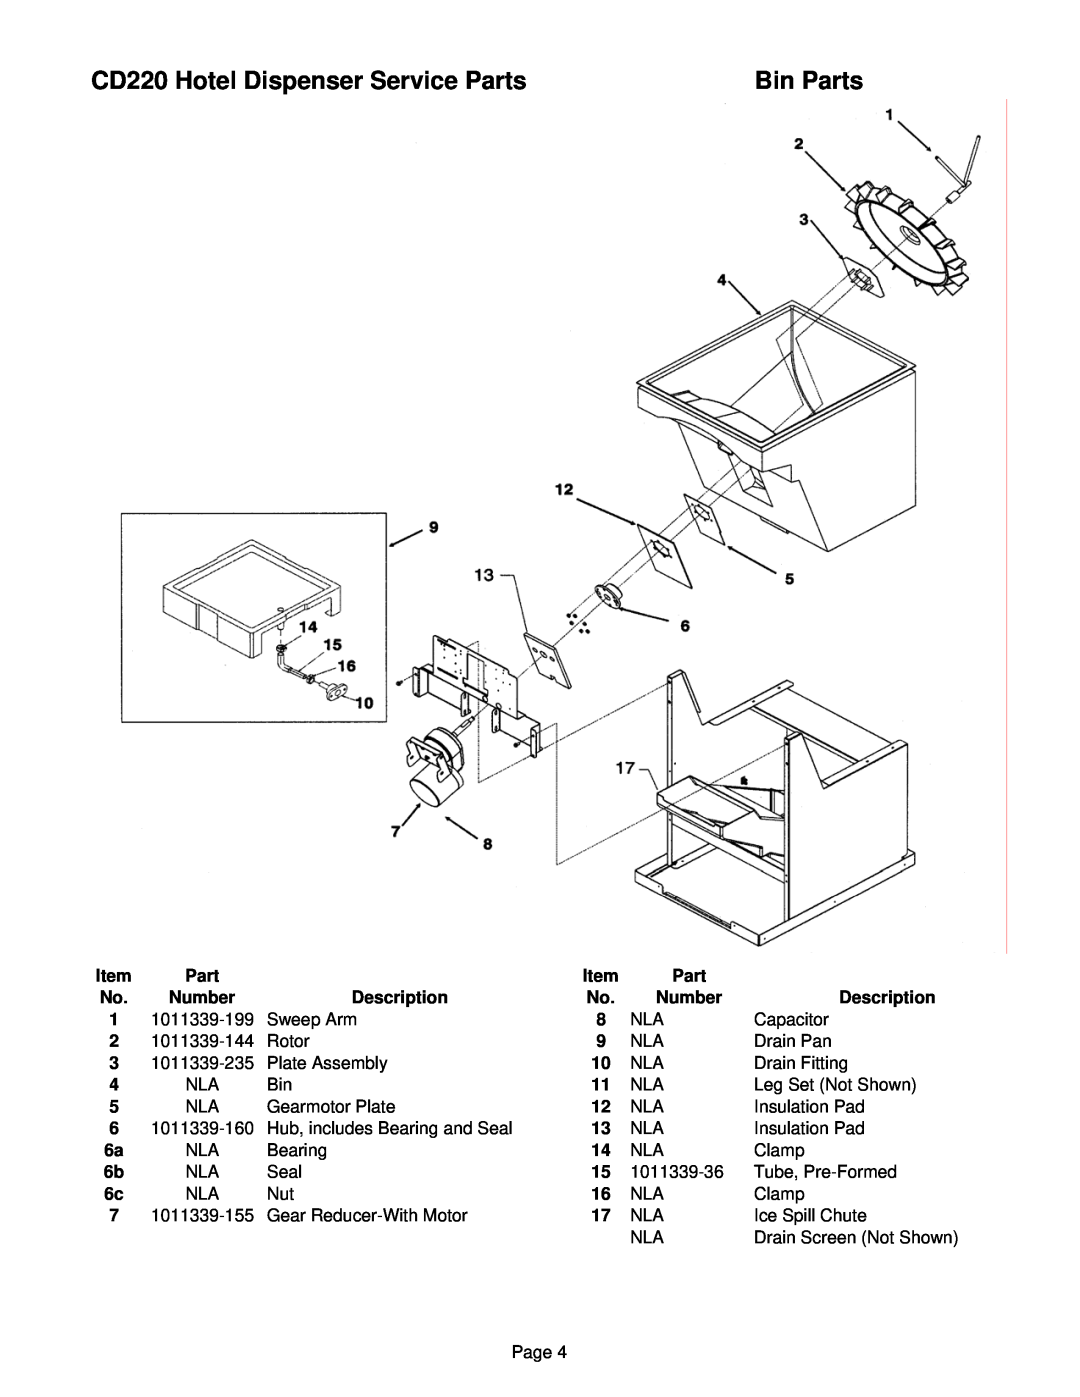 Ice-O-Matic manual Bin Parts, CD220 Hotel Dispenser Service Parts, Number, Description 